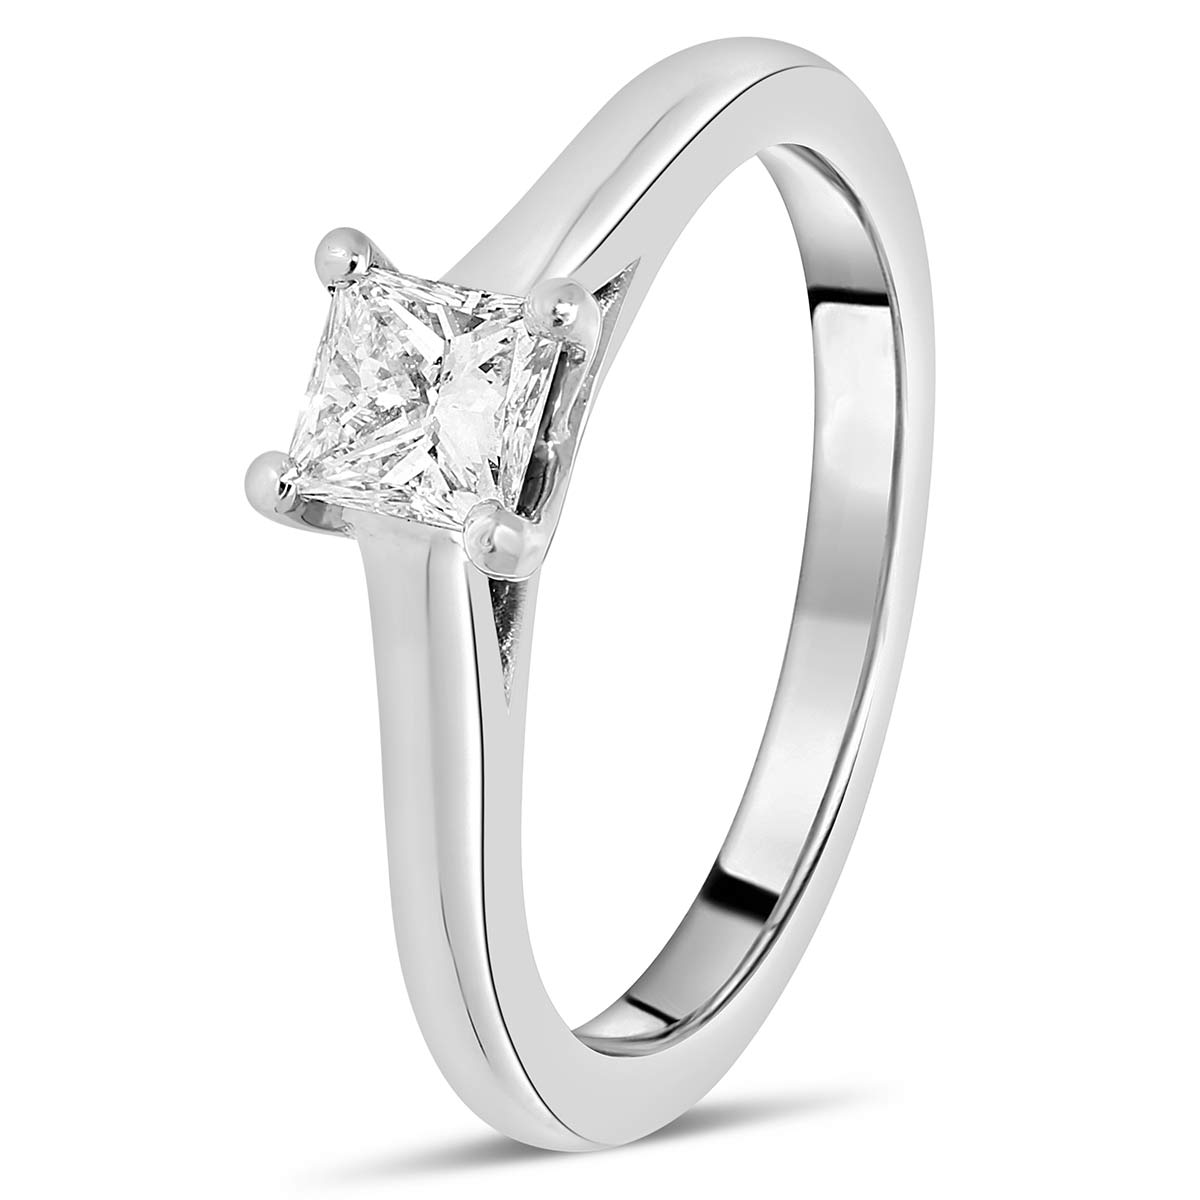 st-martin-pr-solitaires-diamants-certifies-style-classique-platine-950-